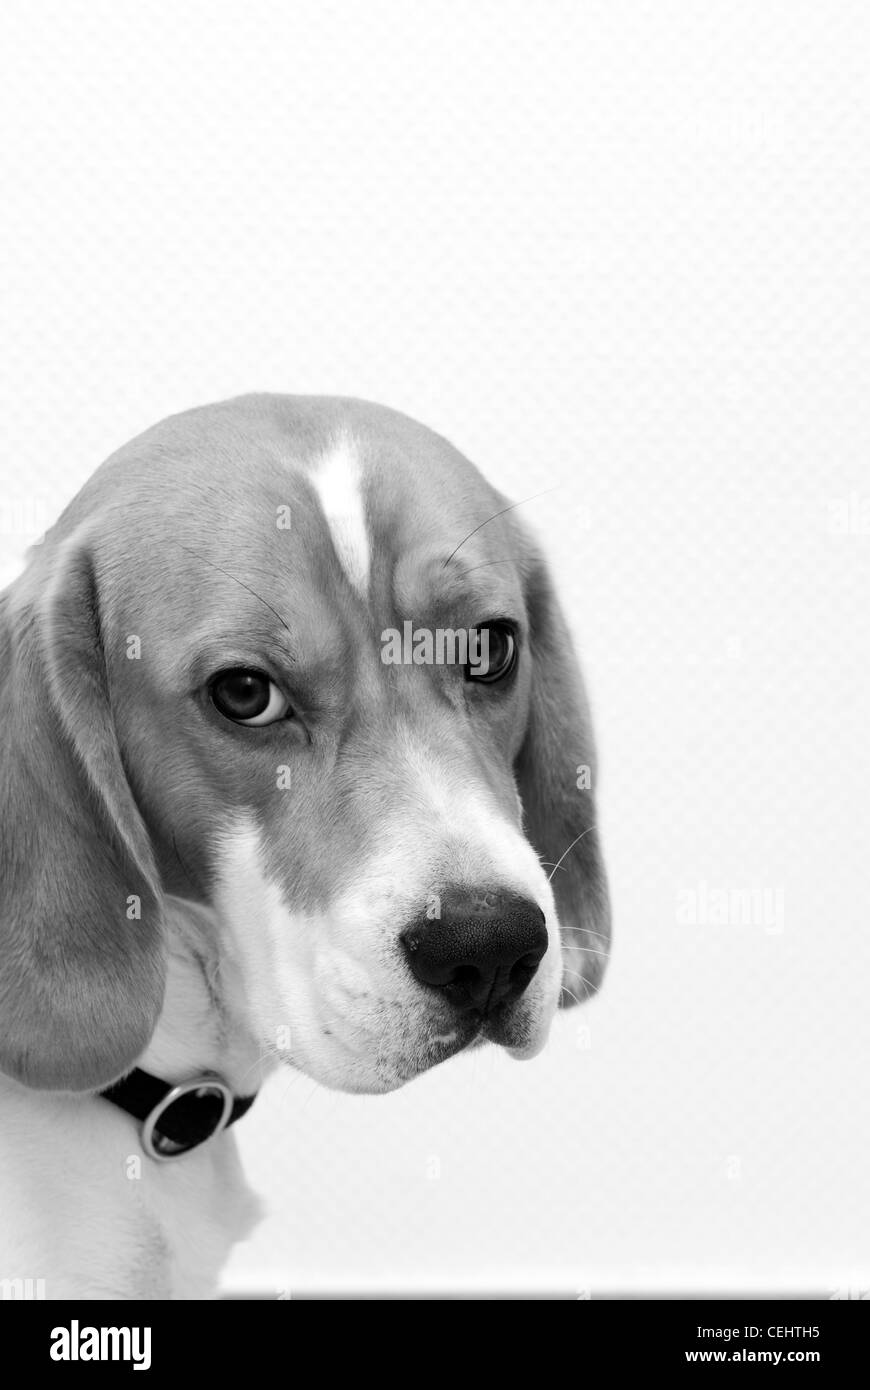 beagle snoopy